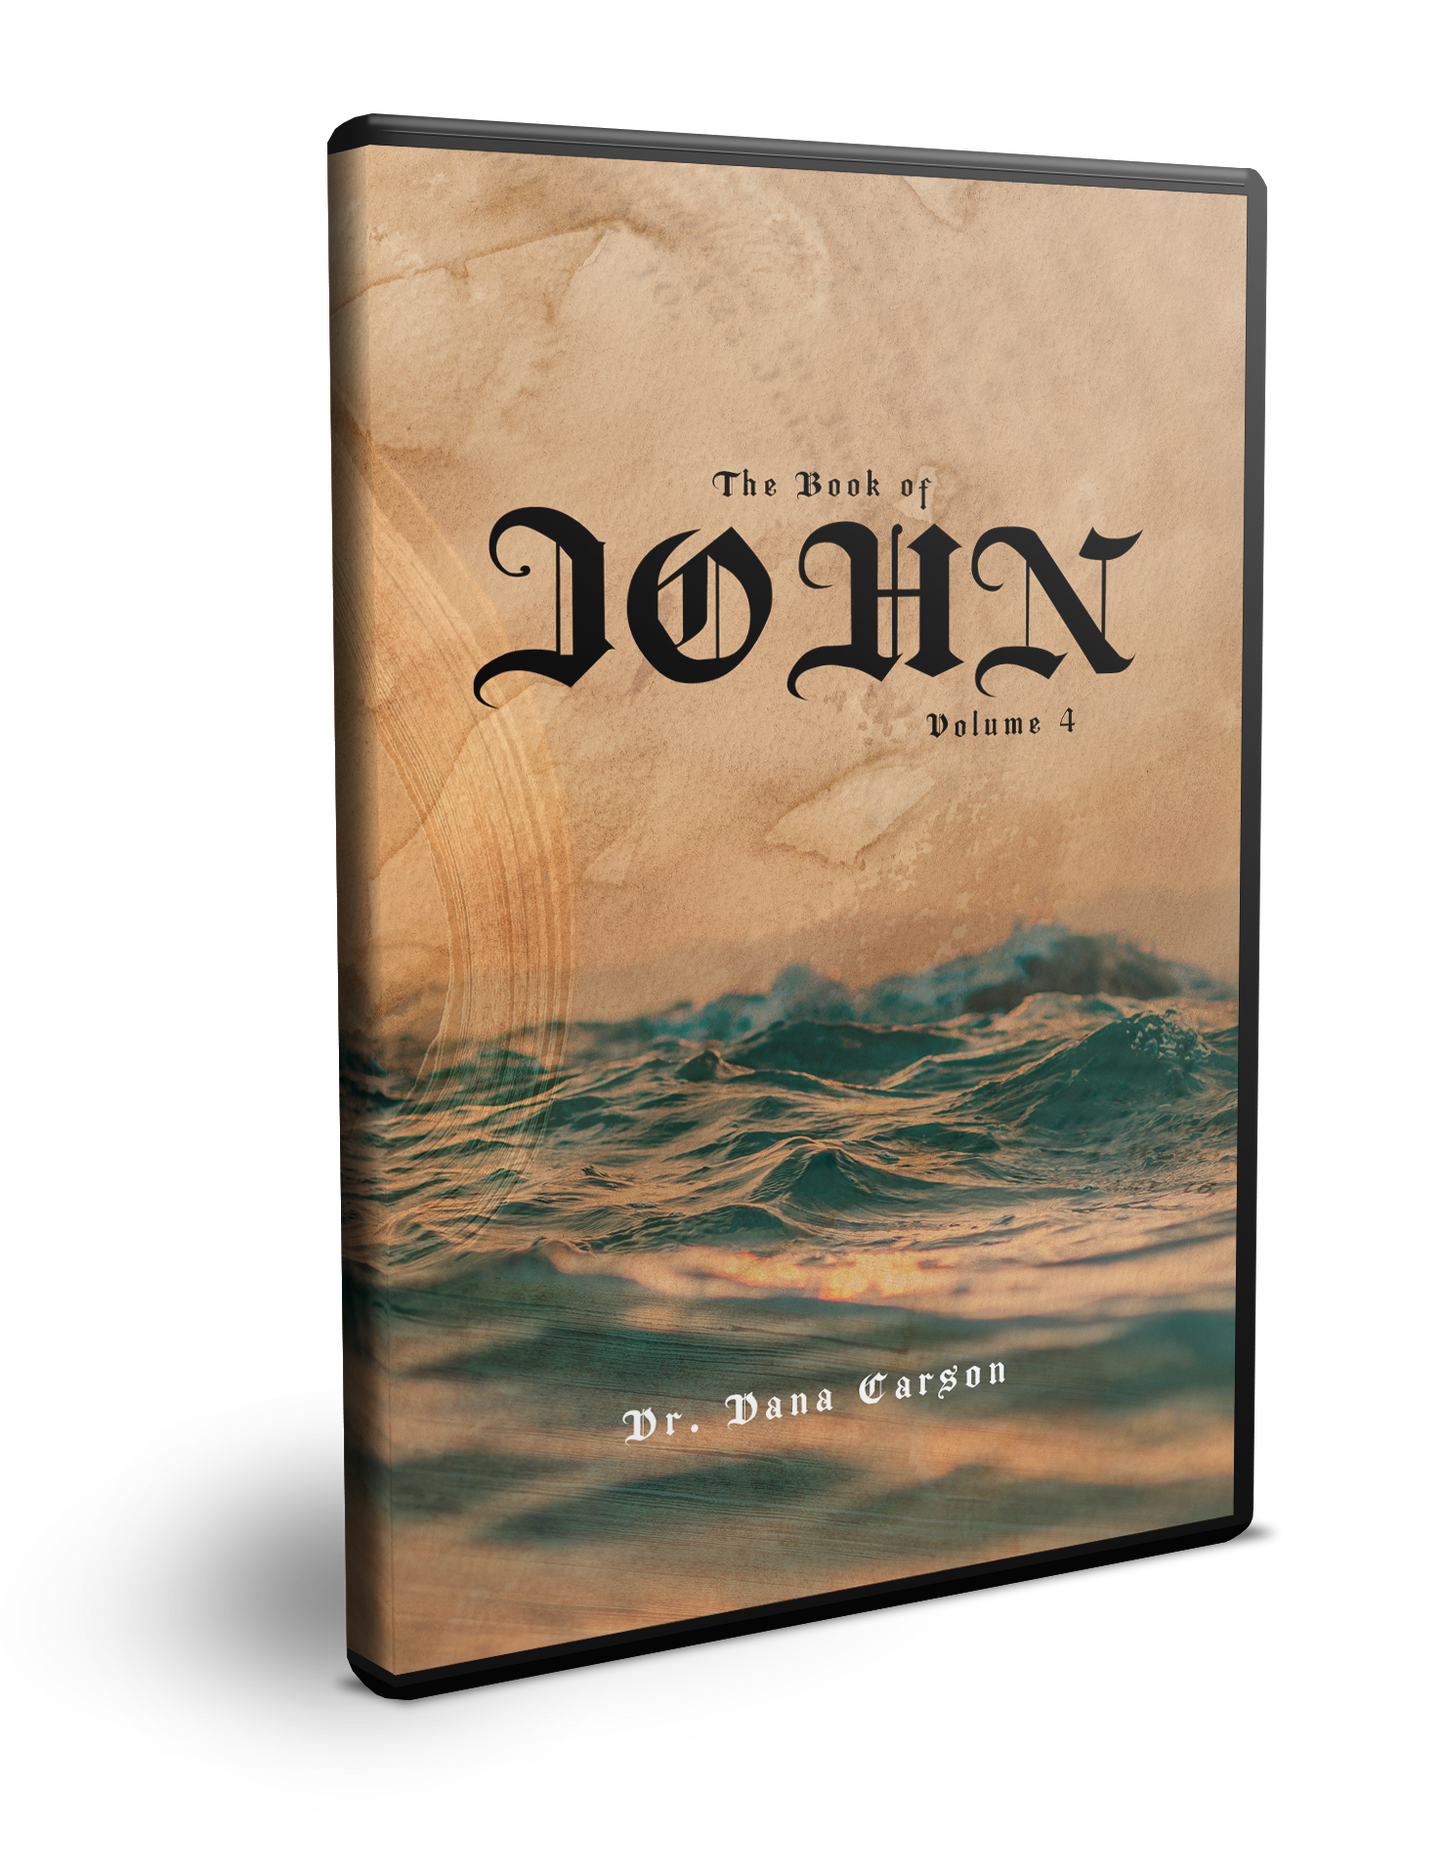 The Book of John Series Volume 7